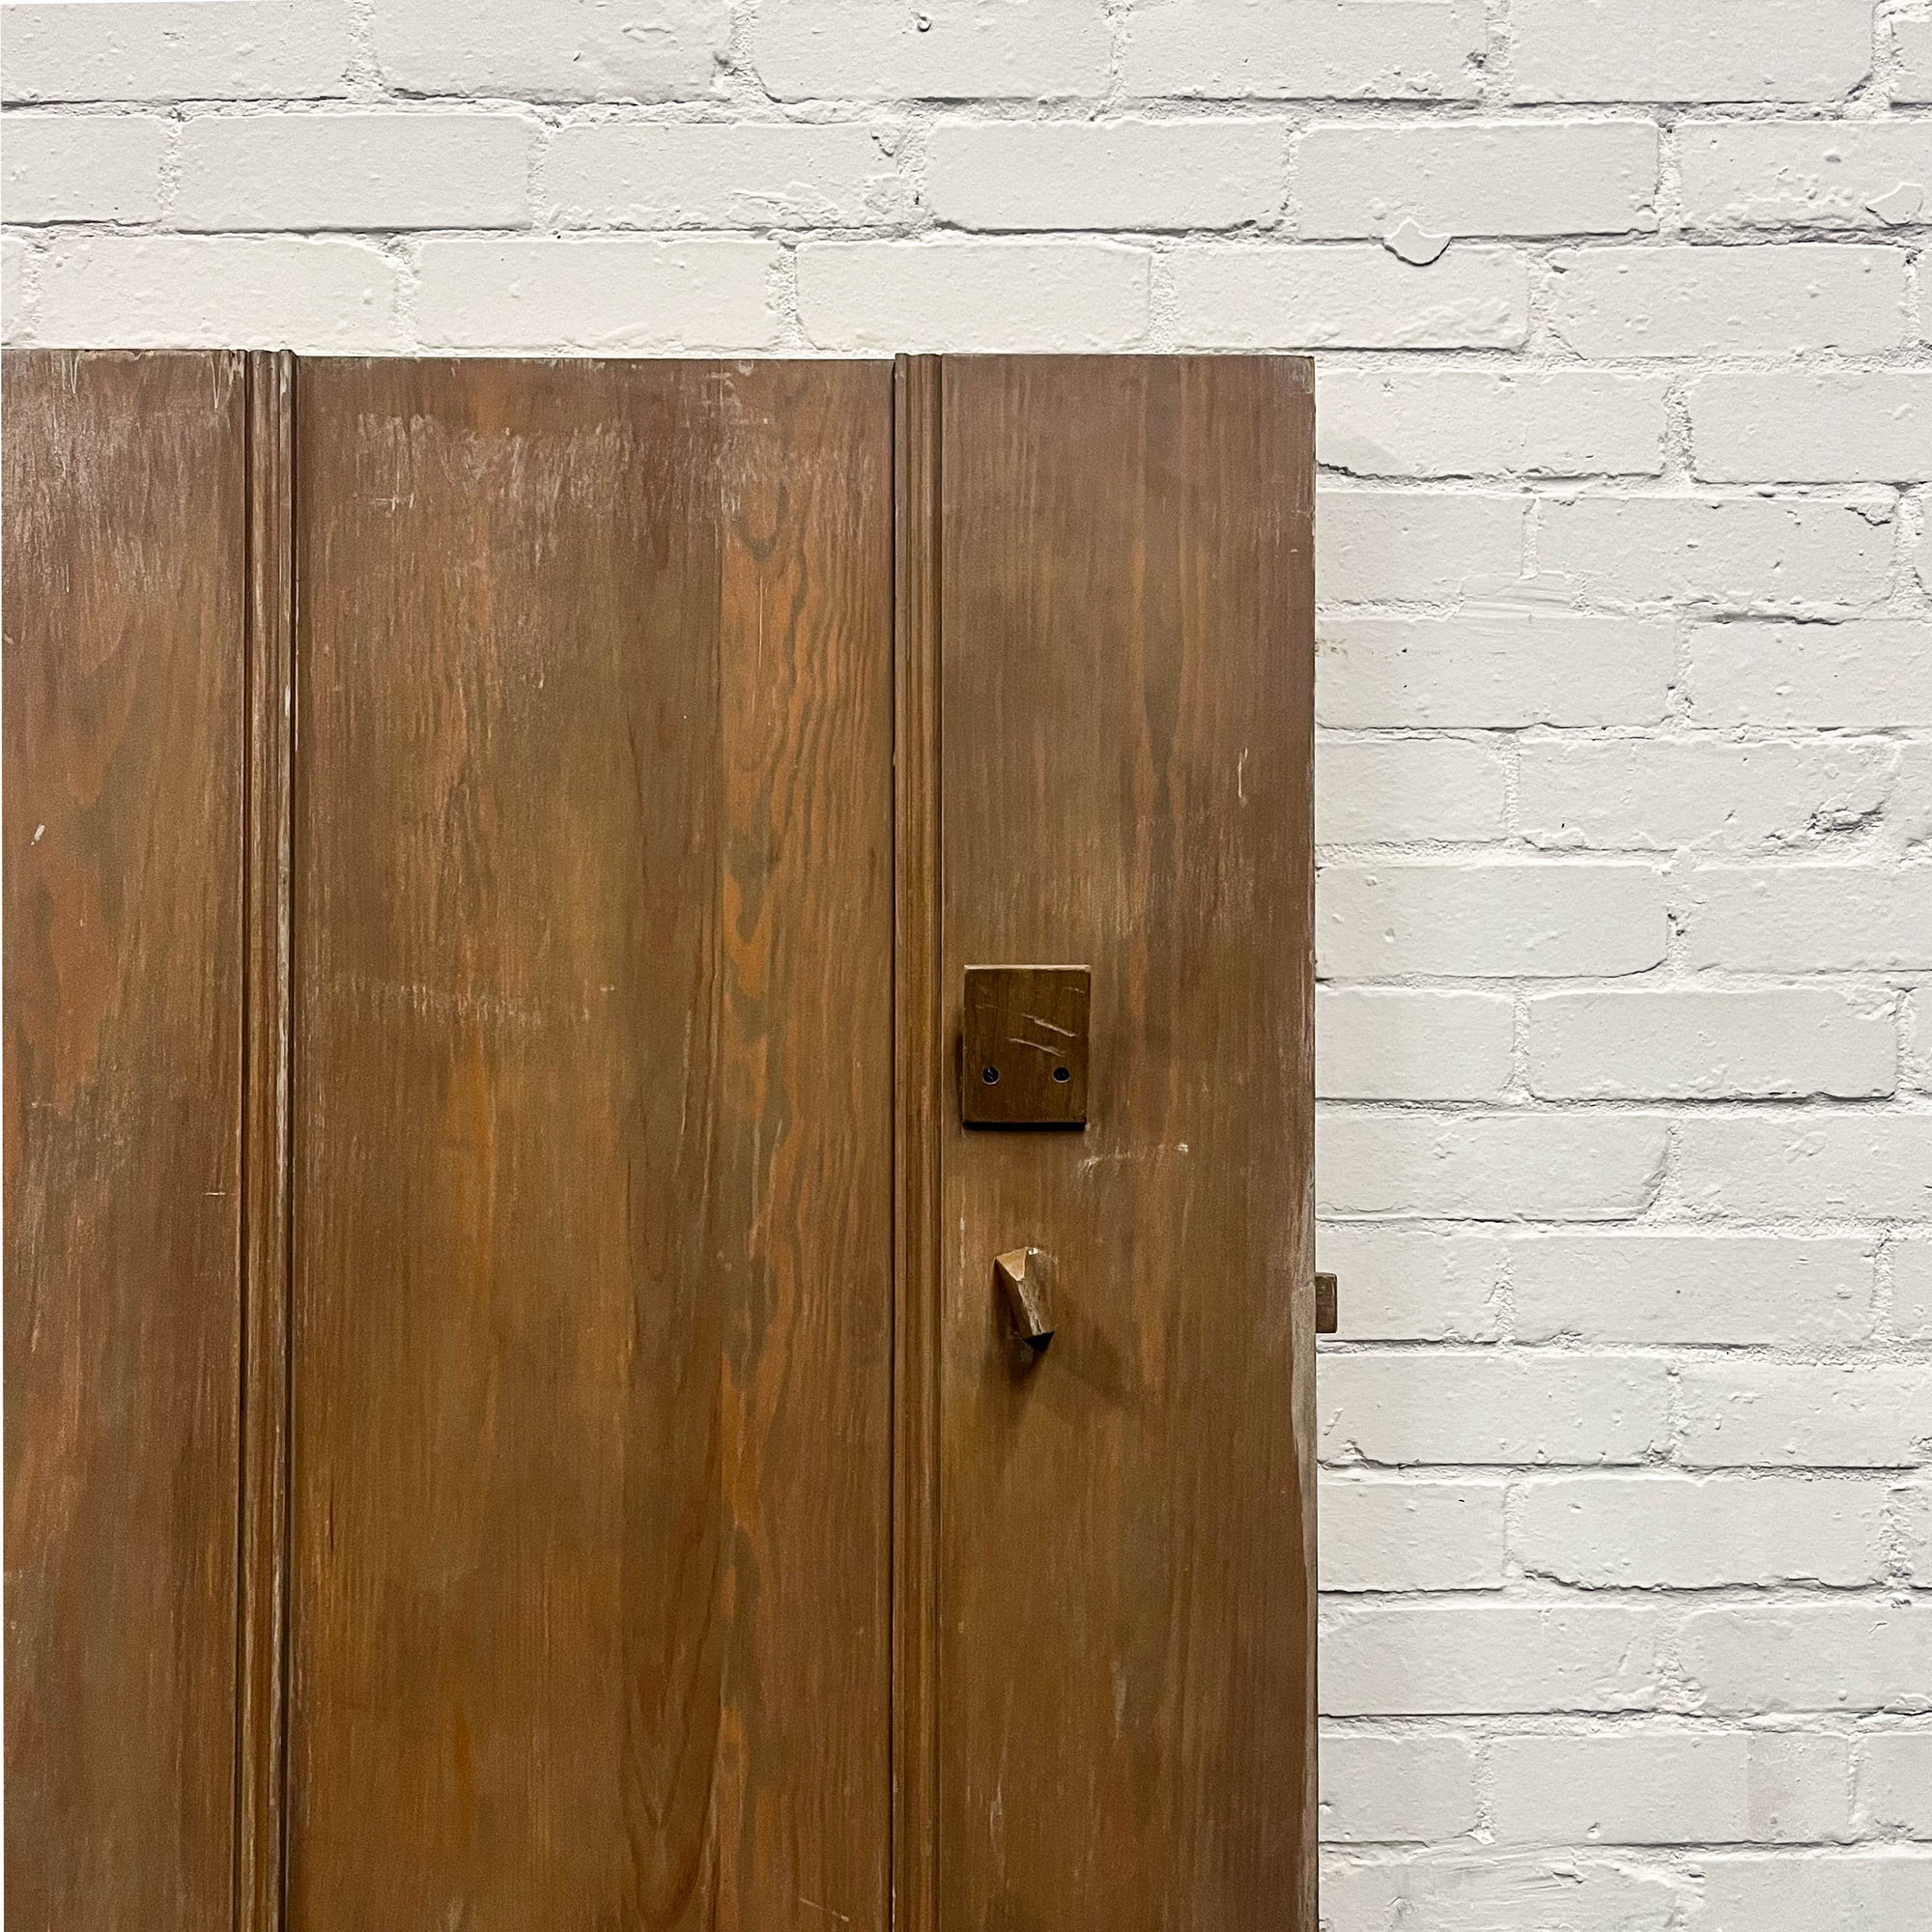 Antique Victorian Pine Latch Door - 194cm x 83cm | The Architectural Forum